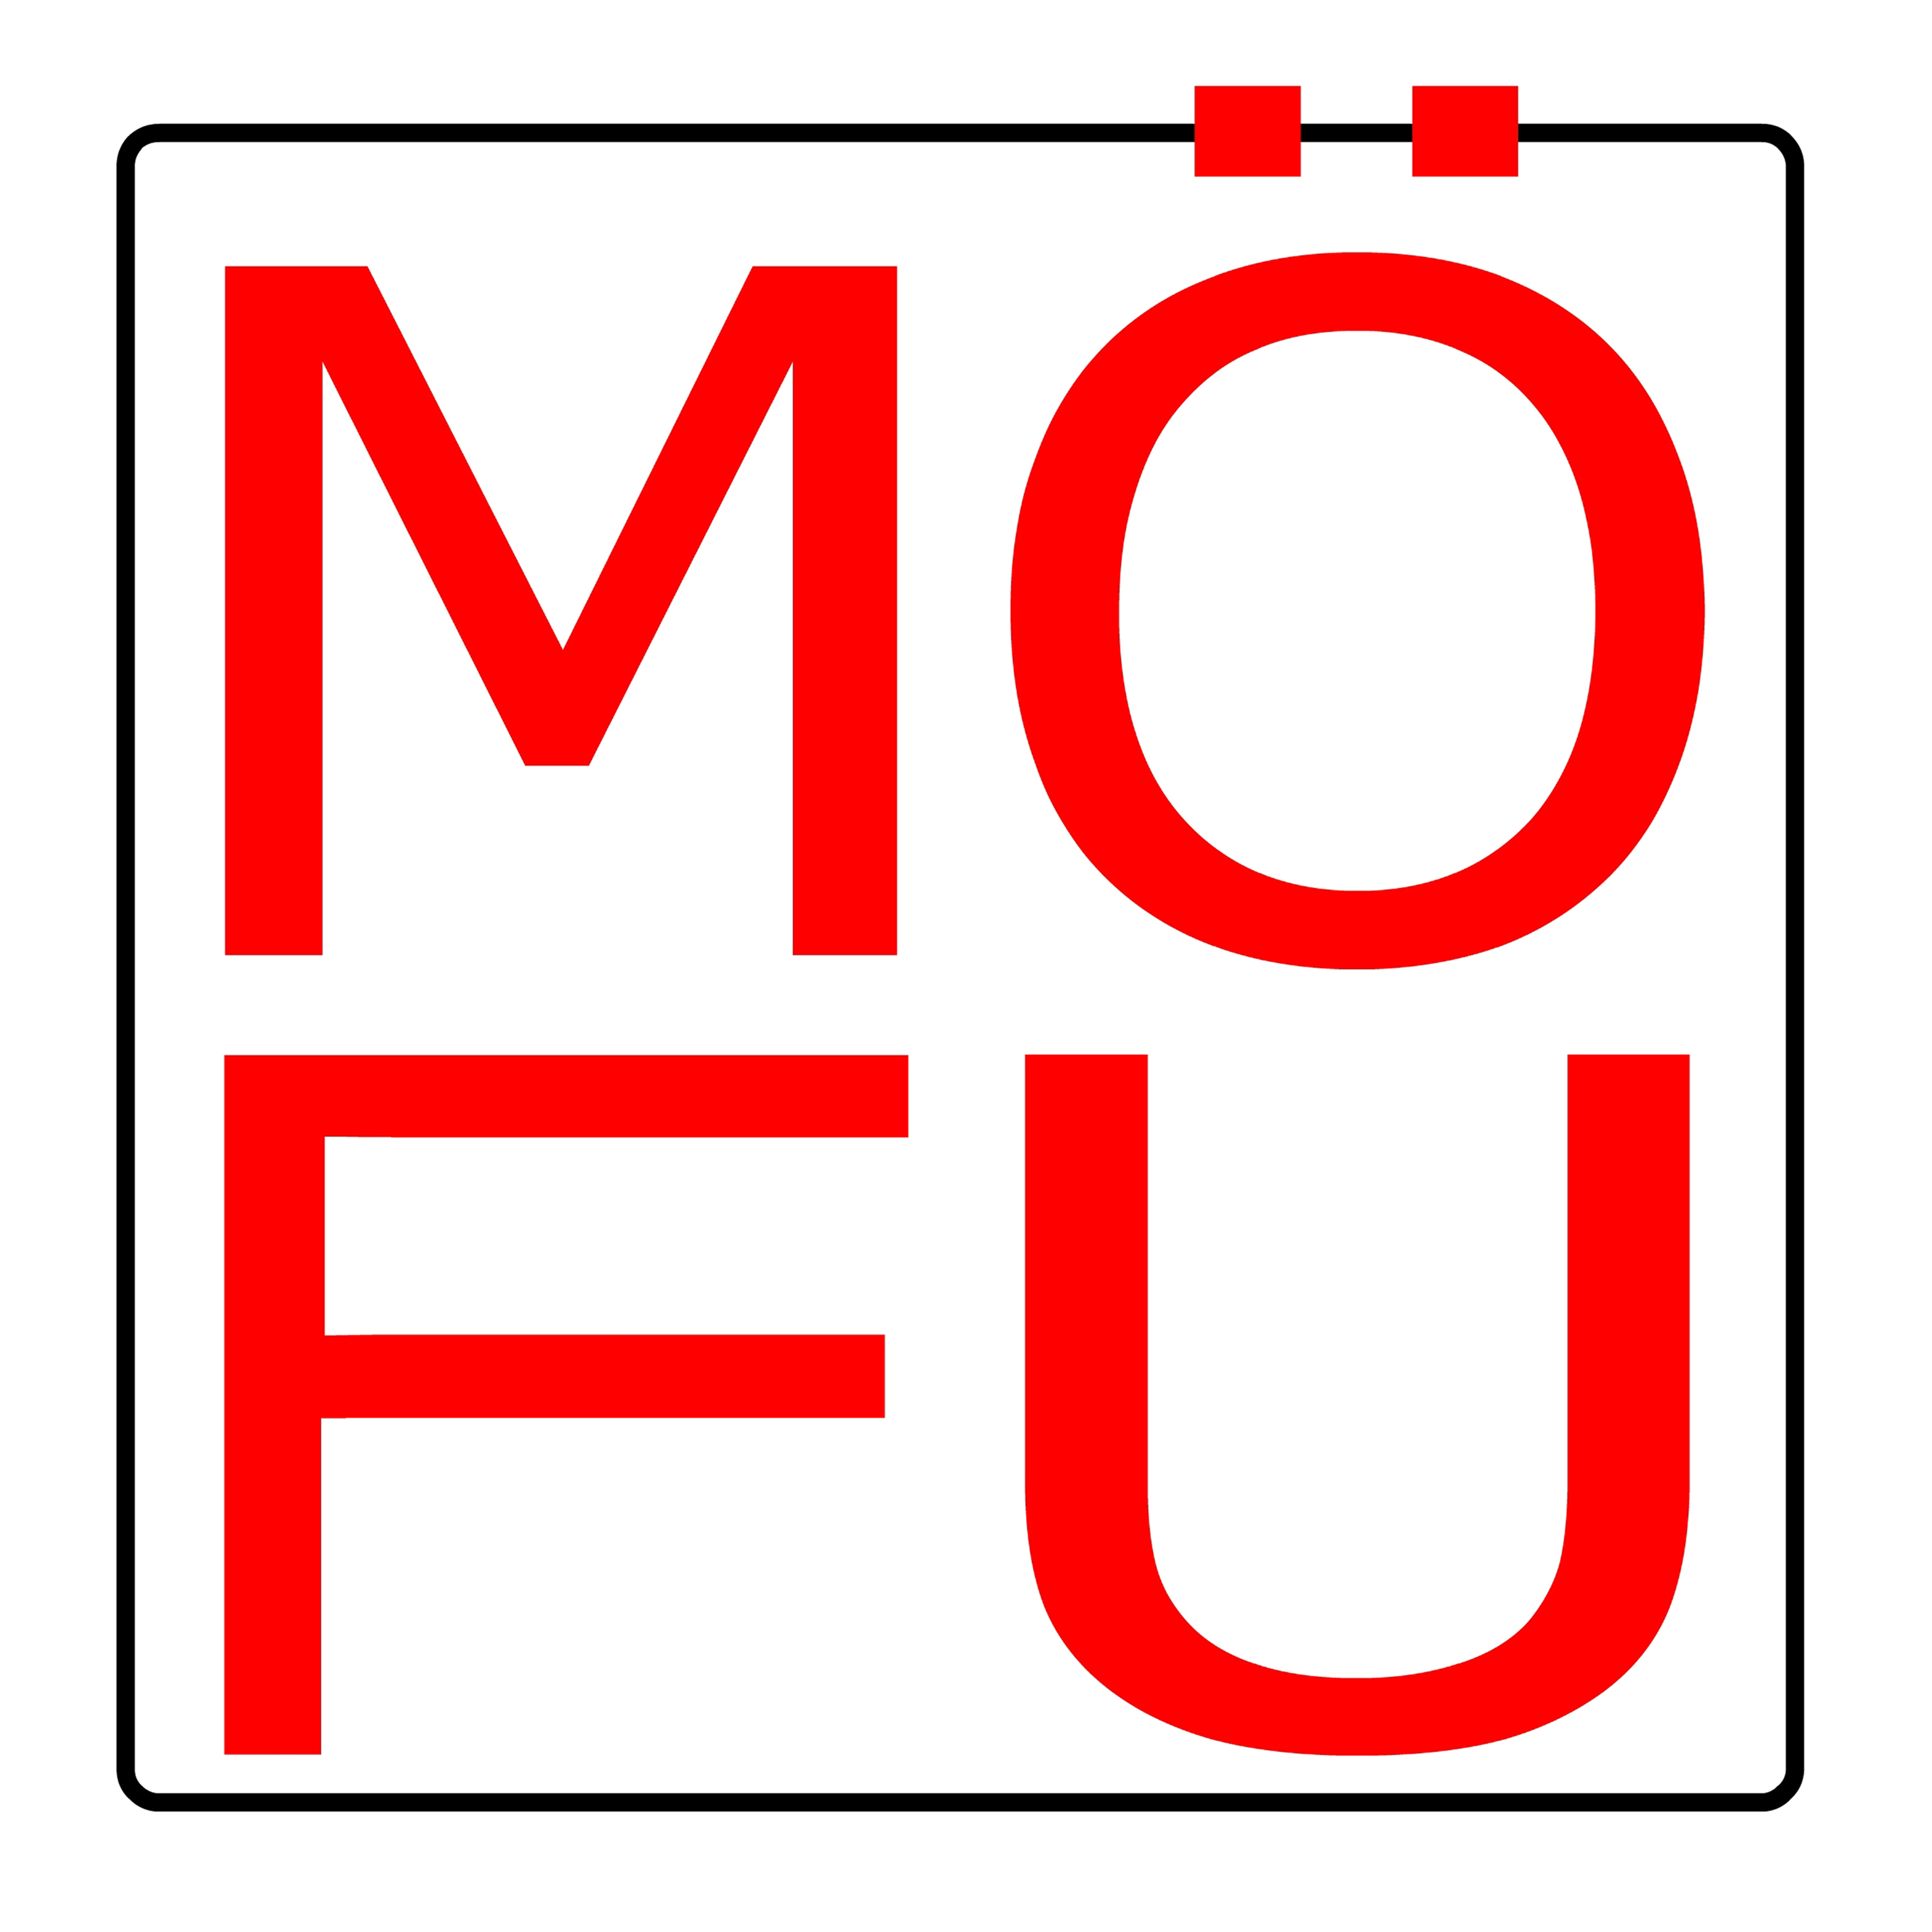 MÖFU - Möbelfundgrube Inh. Matthias Sommer in Uelzen - Logo